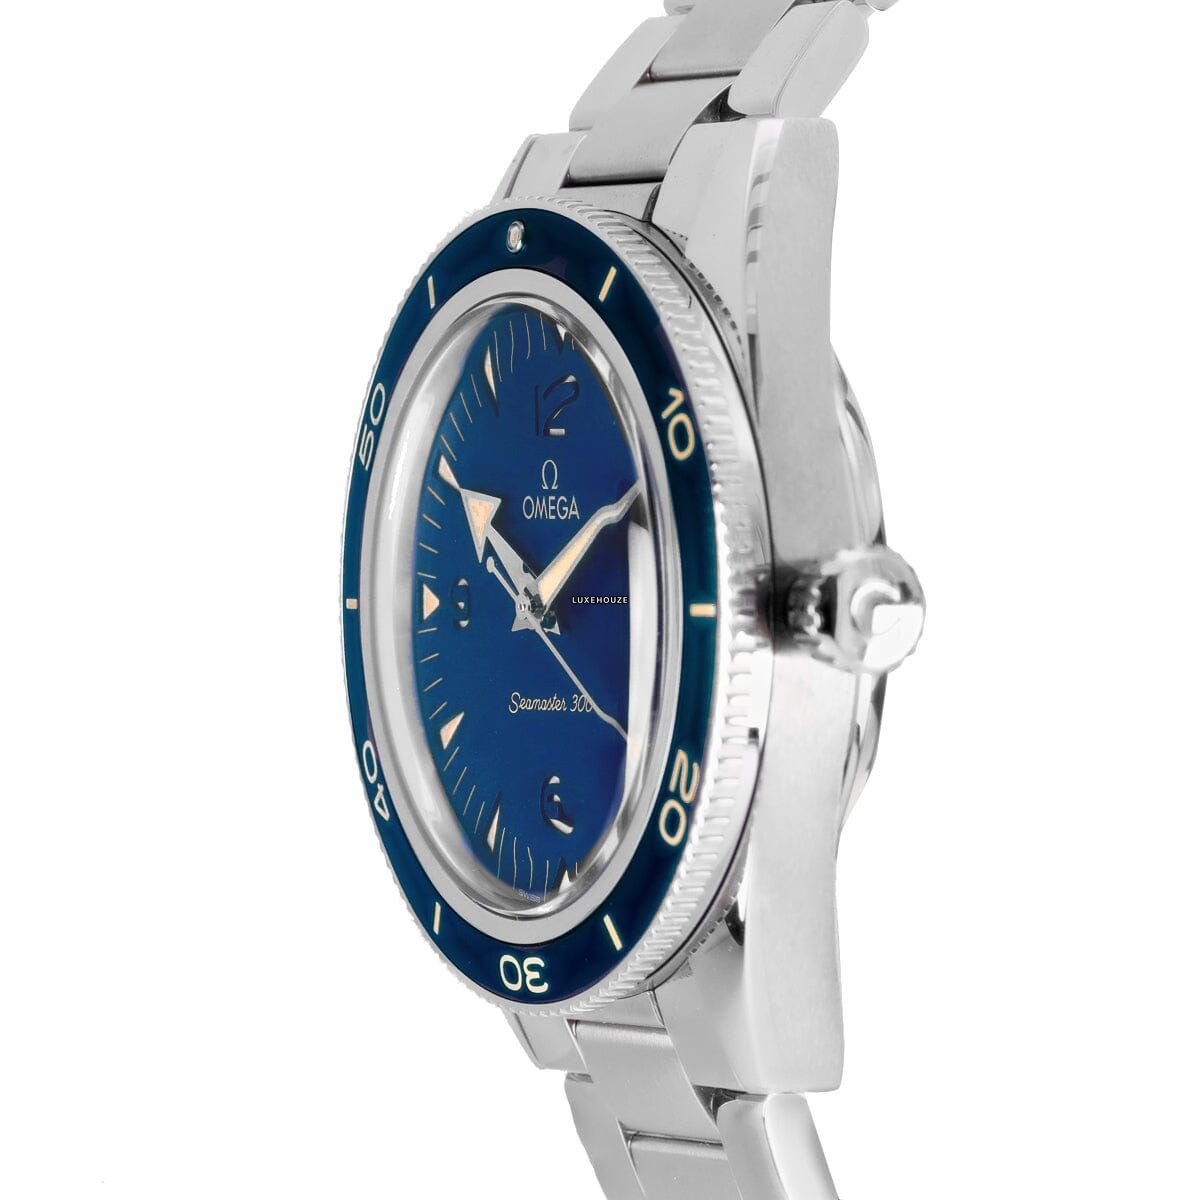 Seamaster 300 23430412103001 Blue Dial, Bracelet Heritage Watches Omega 